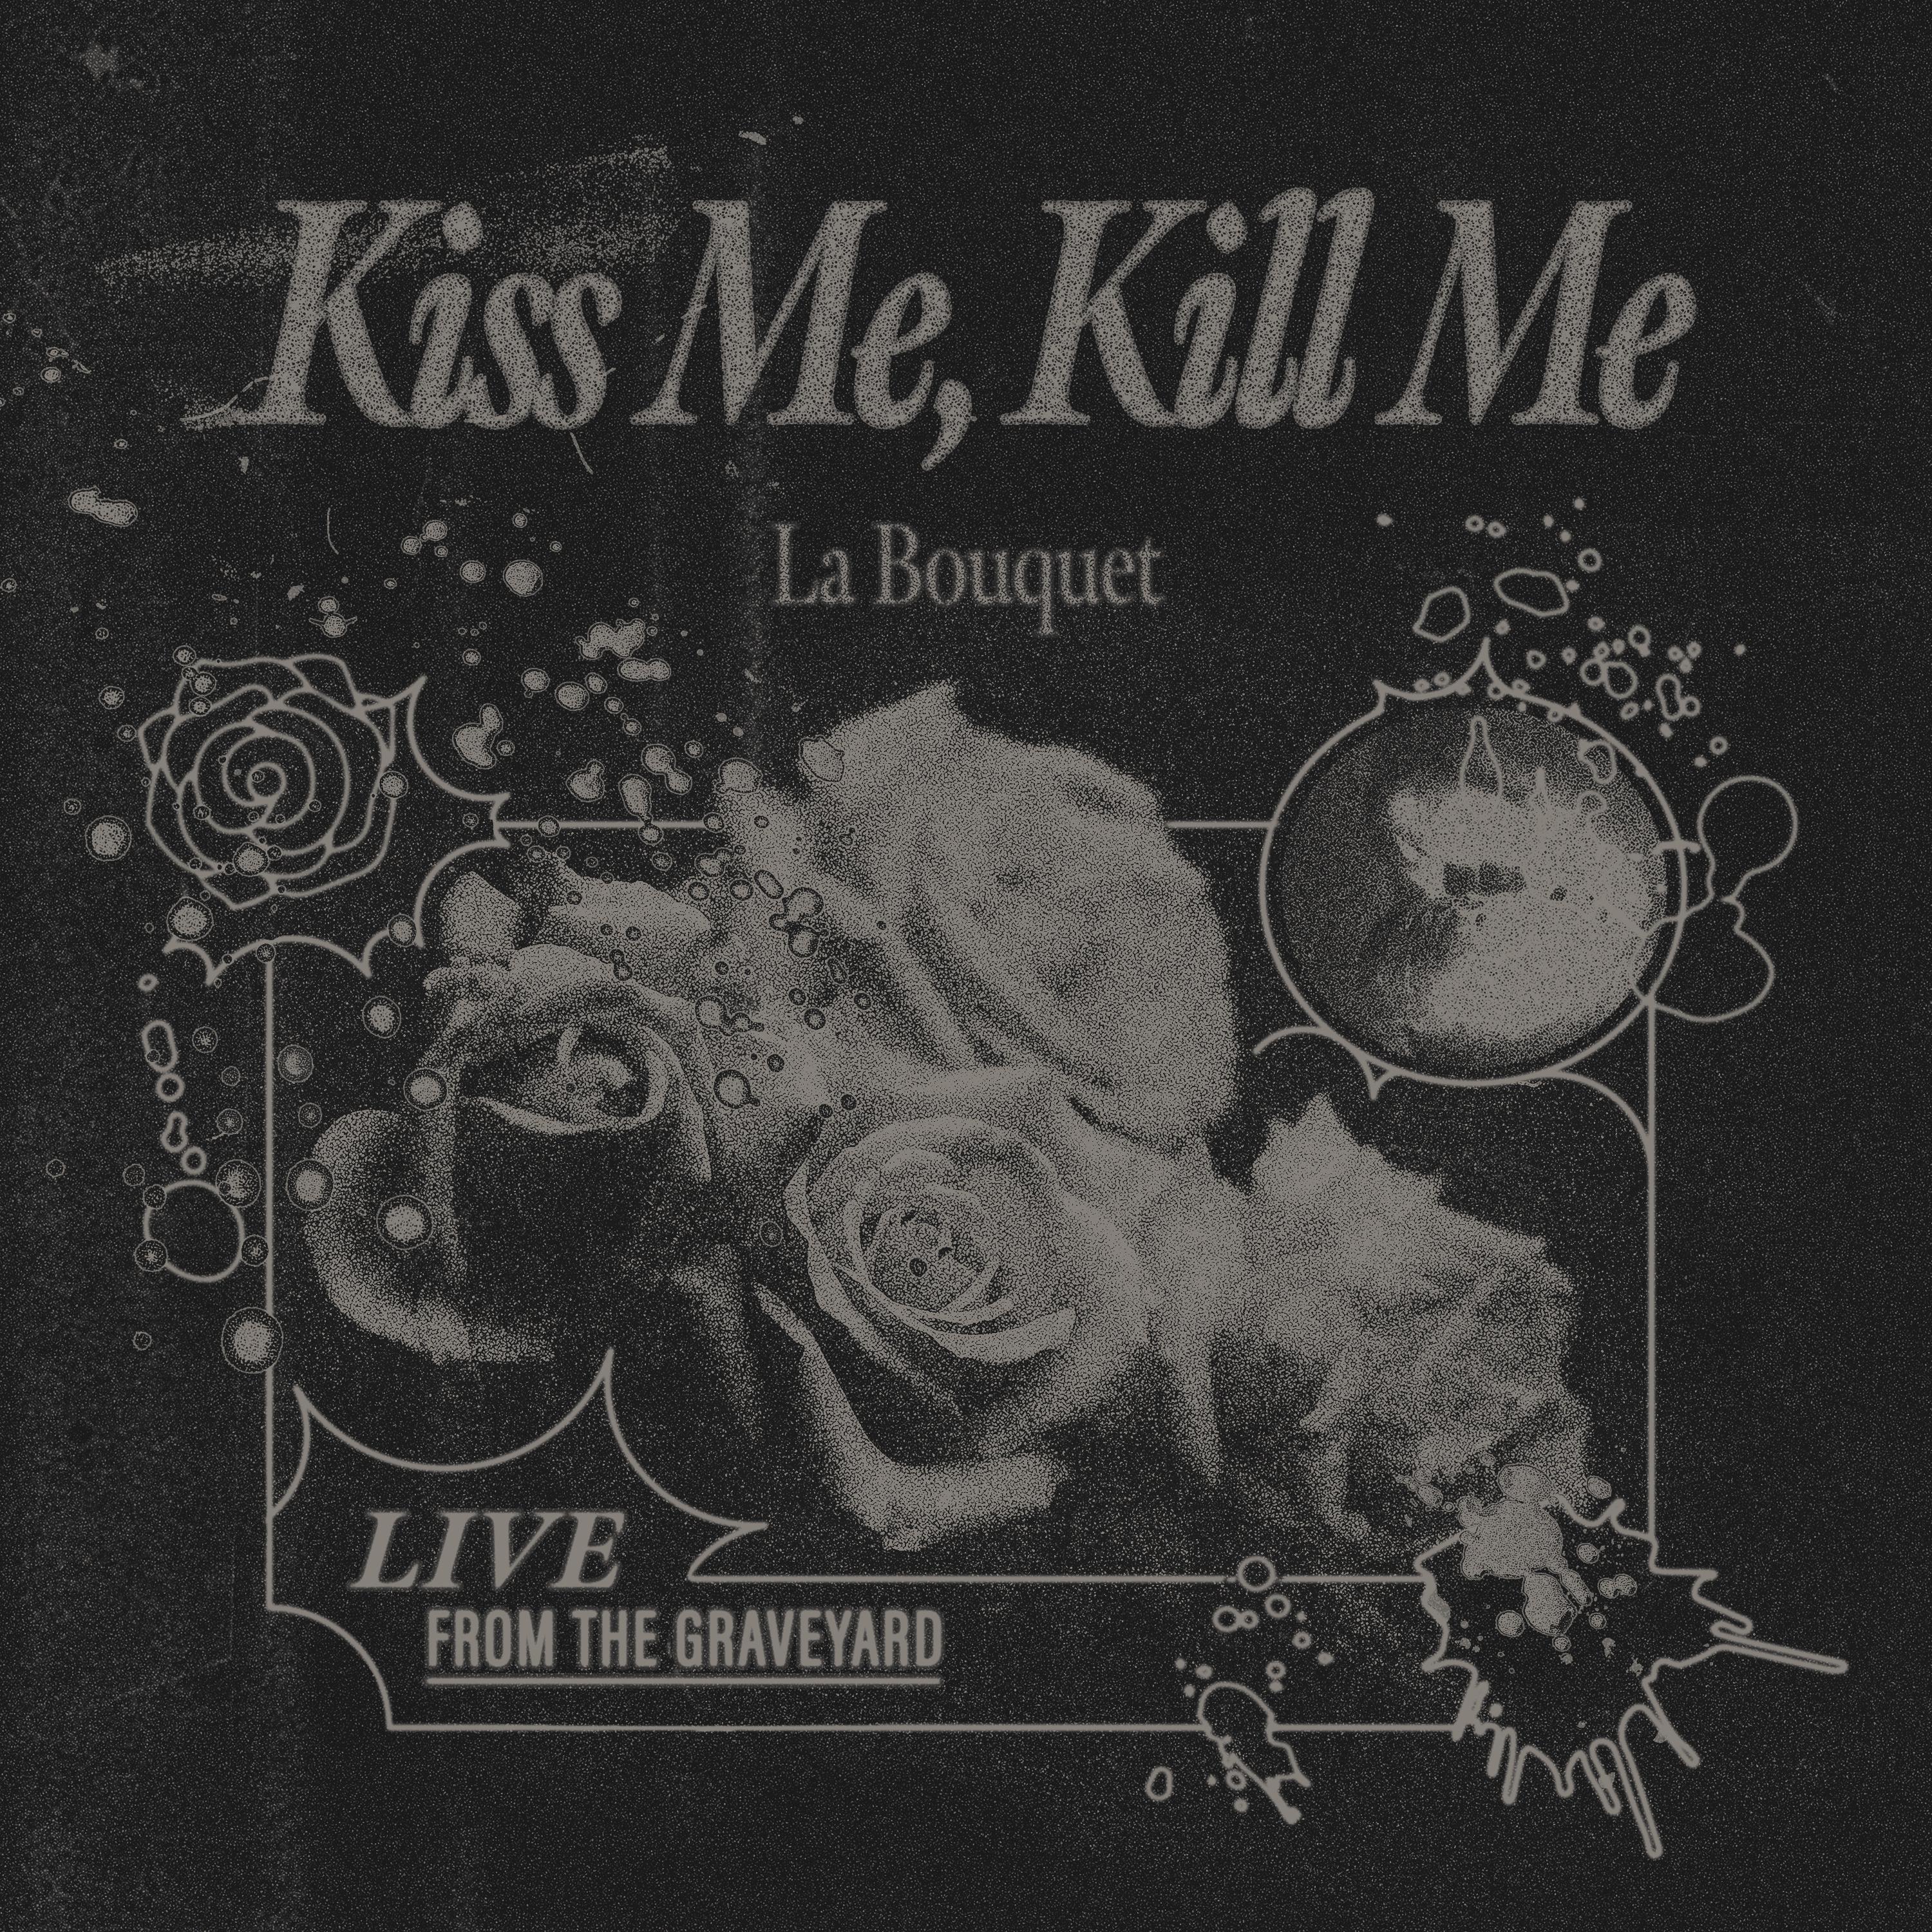 Постер альбома Kiss Me, Kill Me